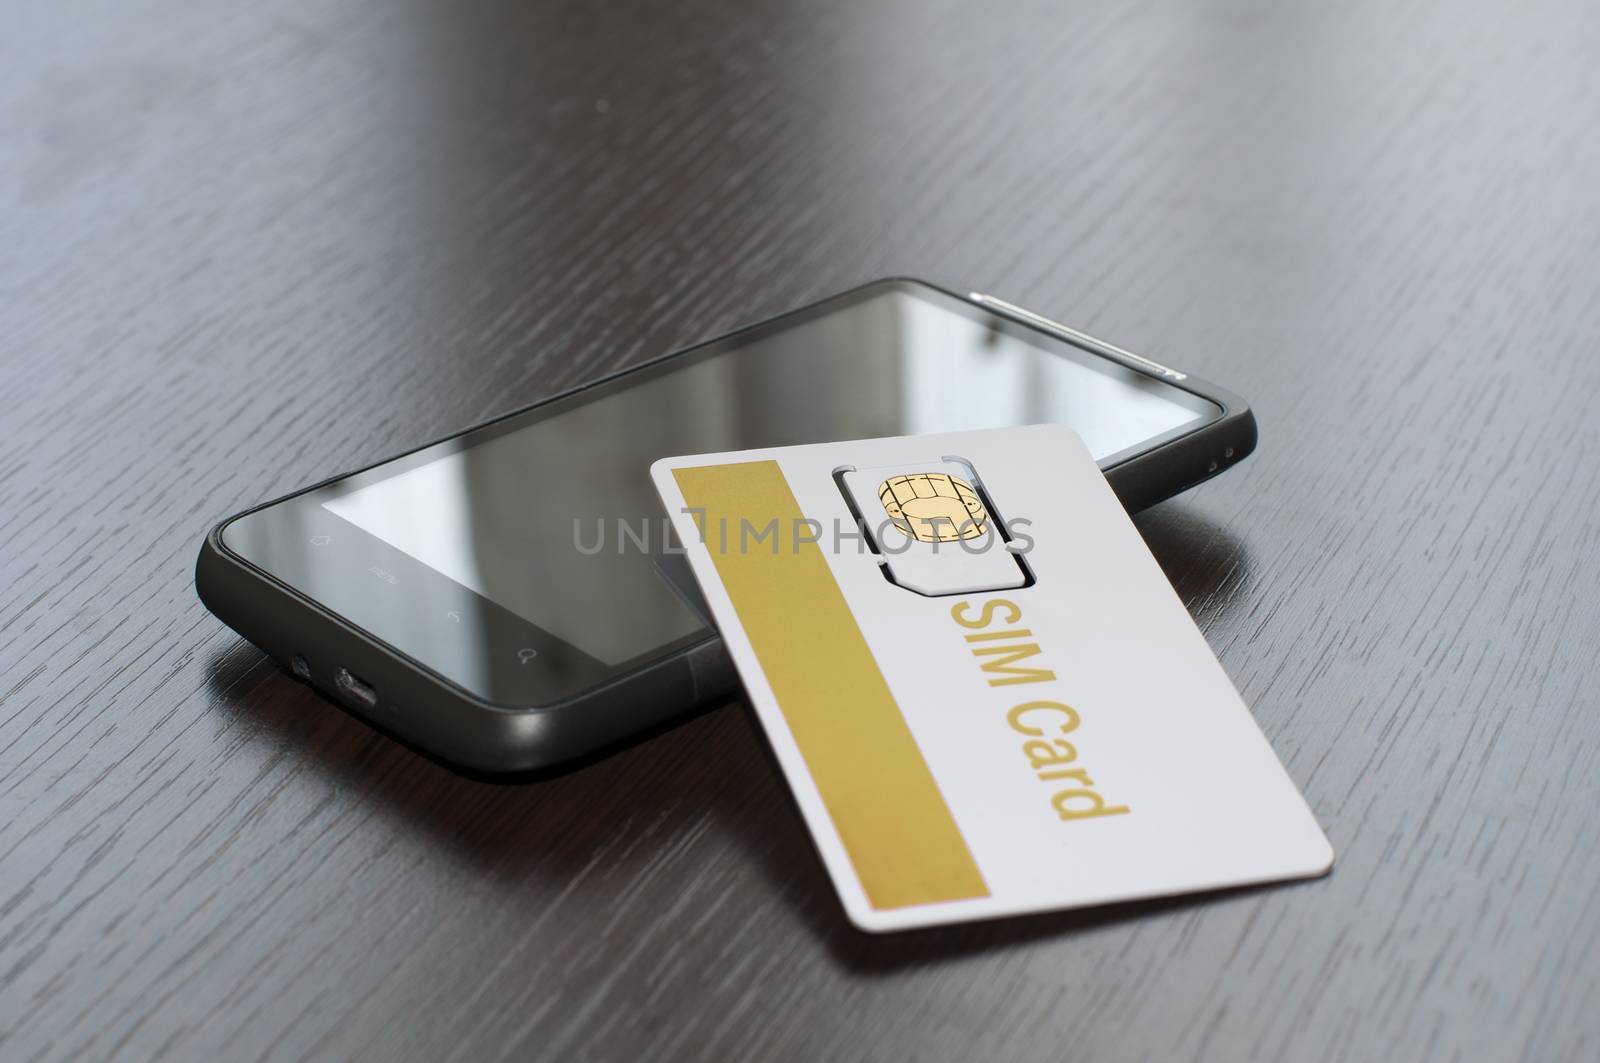 SIM card and mobile phone by deyan_georgiev